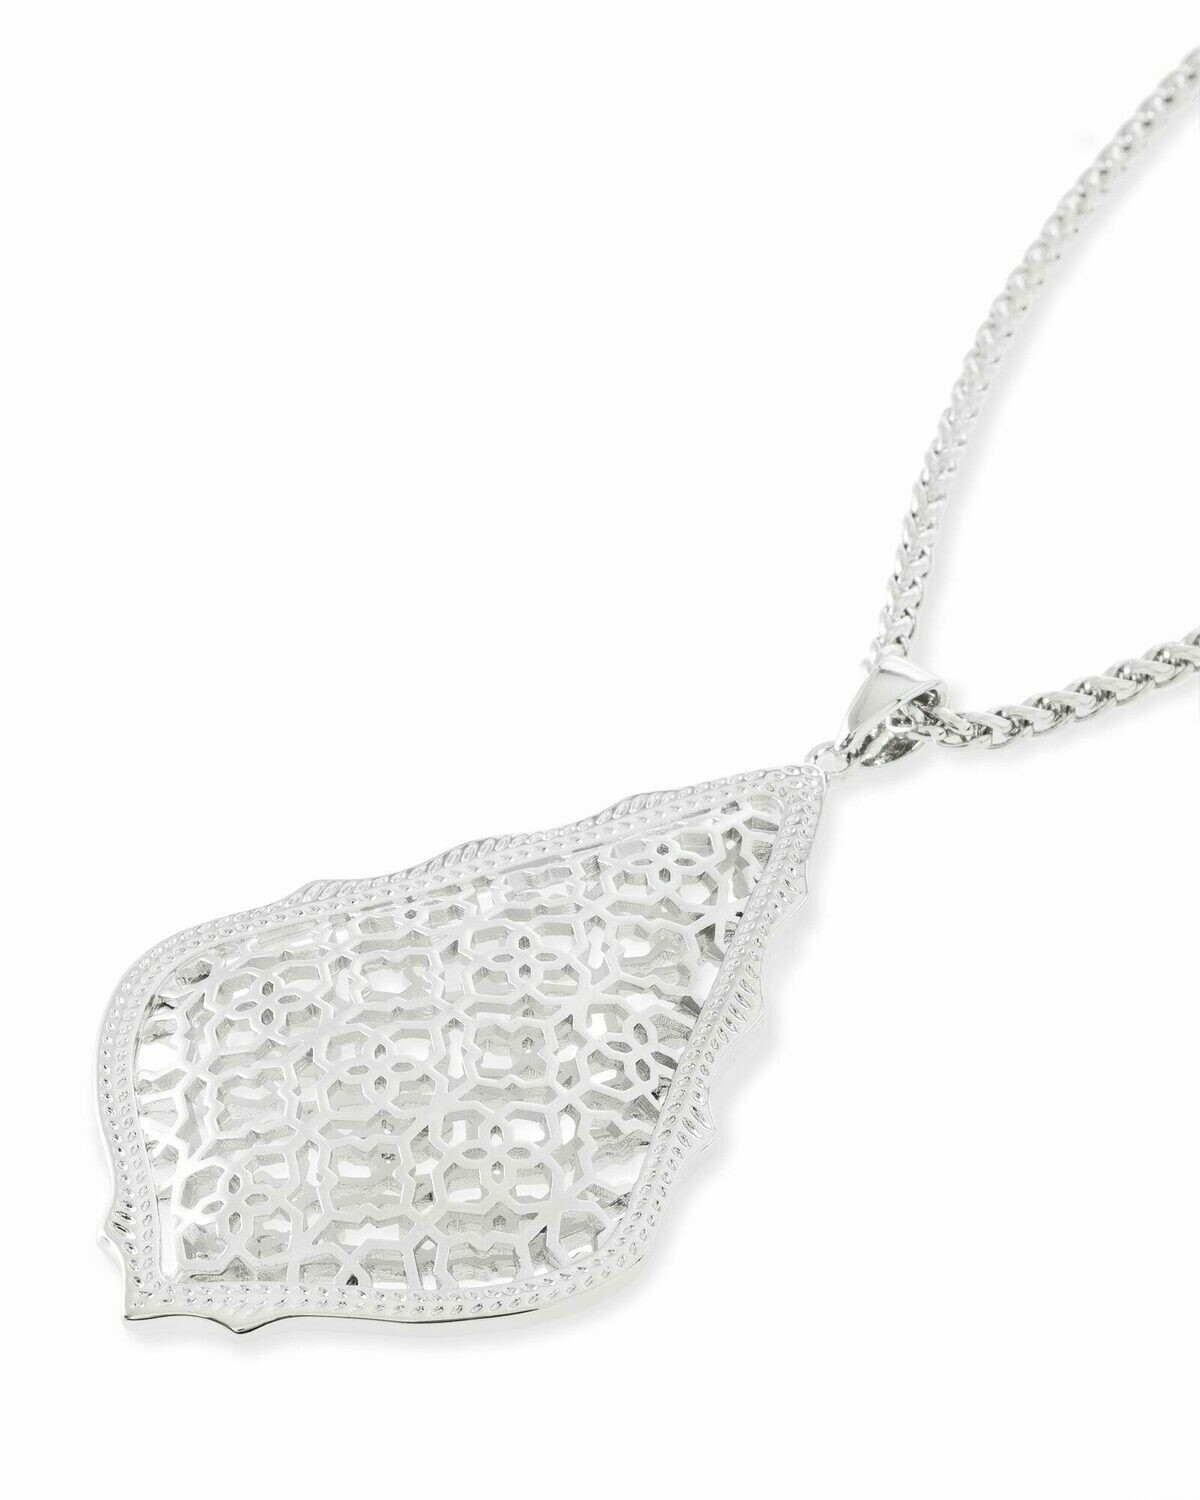 Kendra Scott Aiden Silver Long Pendant Necklace in Silver Filigree